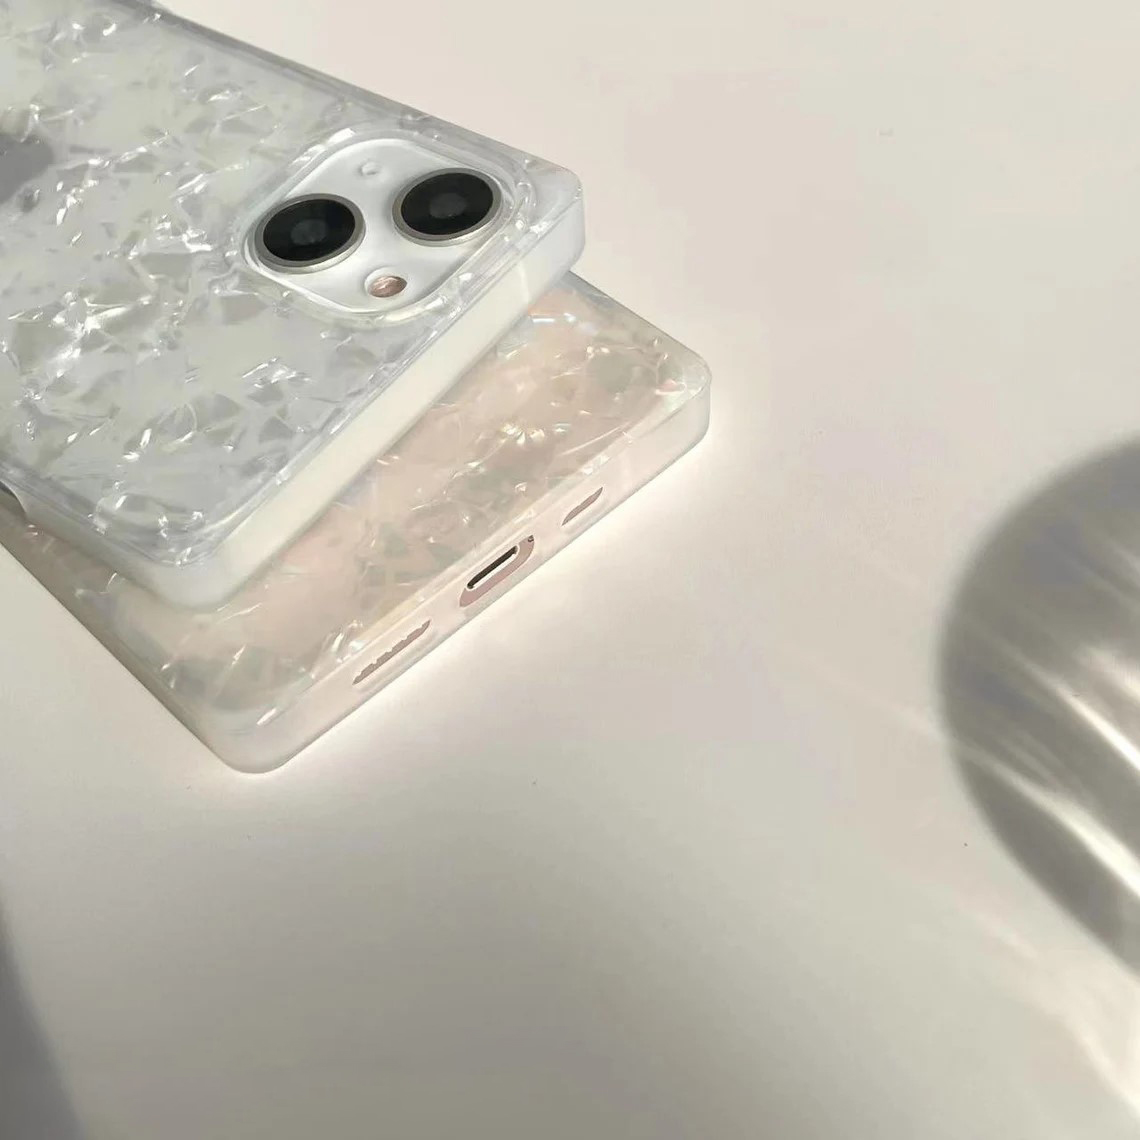 Marble Square iPhone Case - ZiCASE